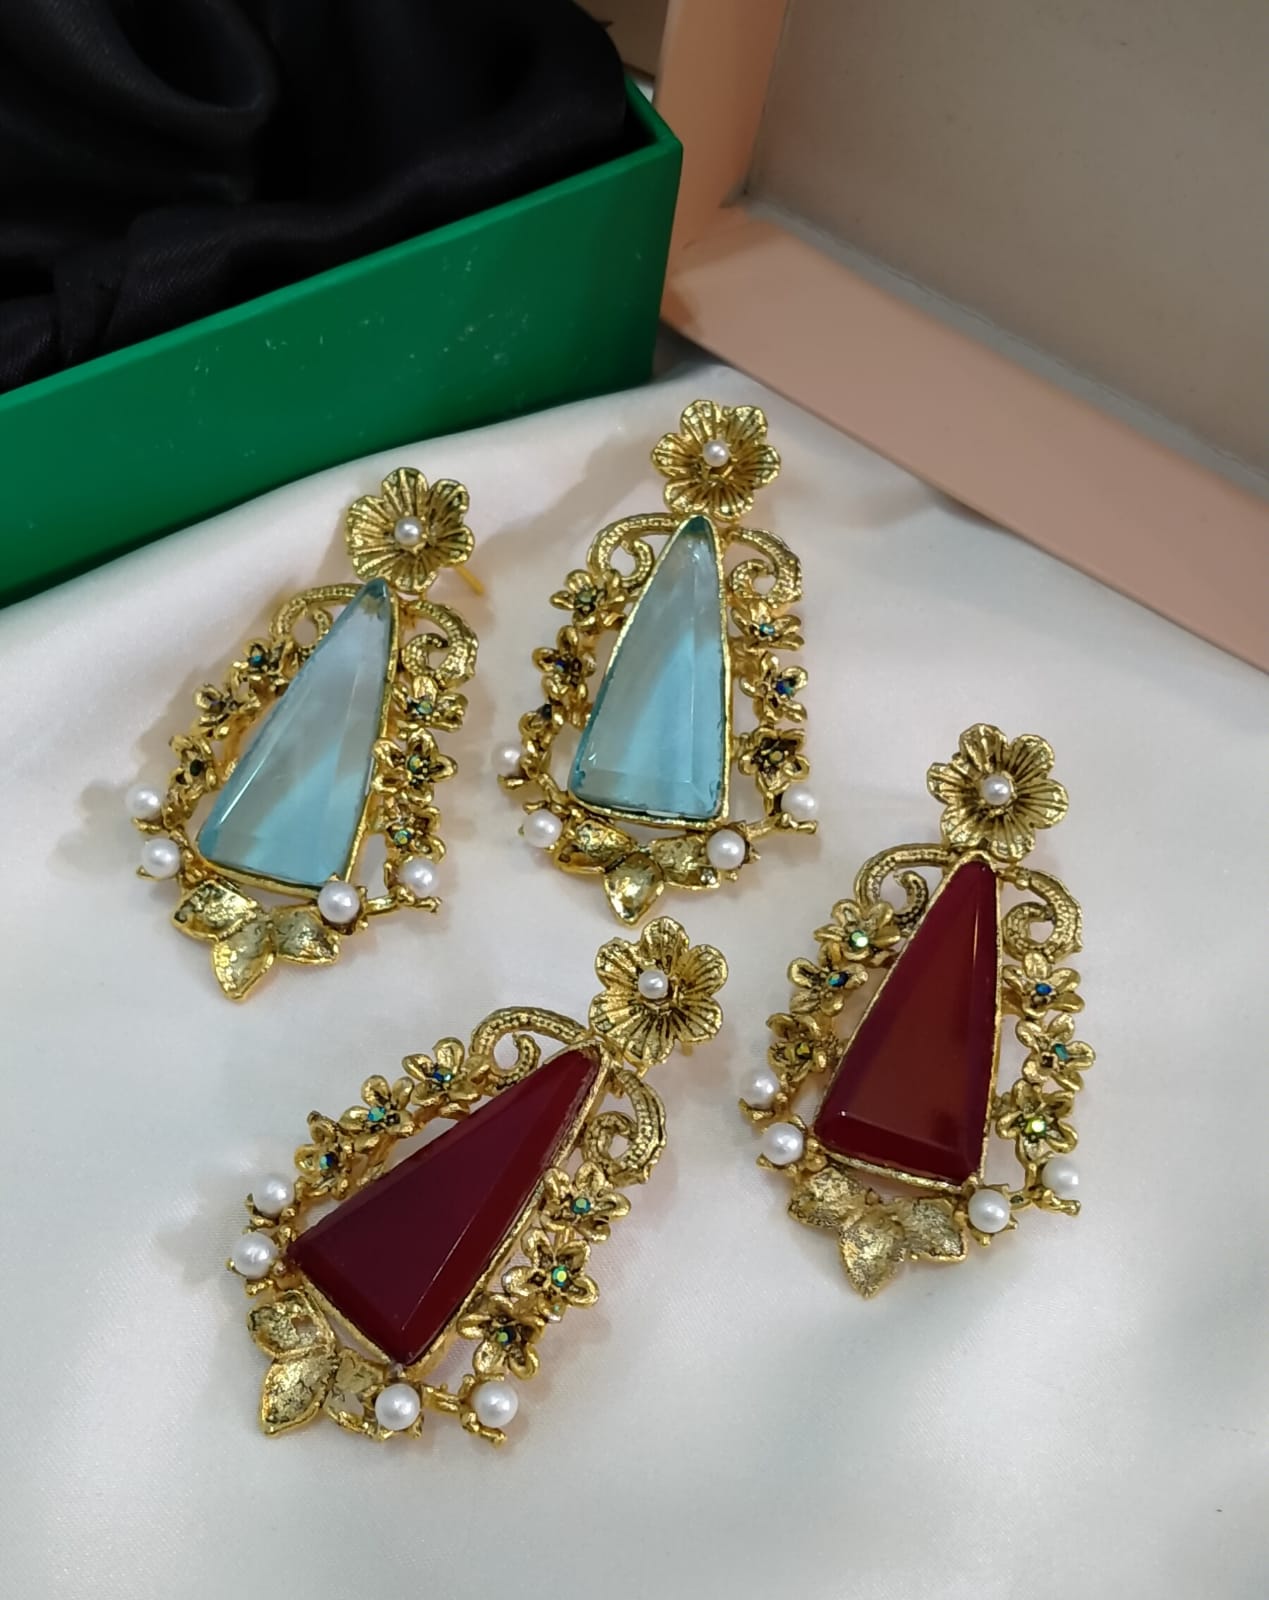 Handmade doubleted stone earrings